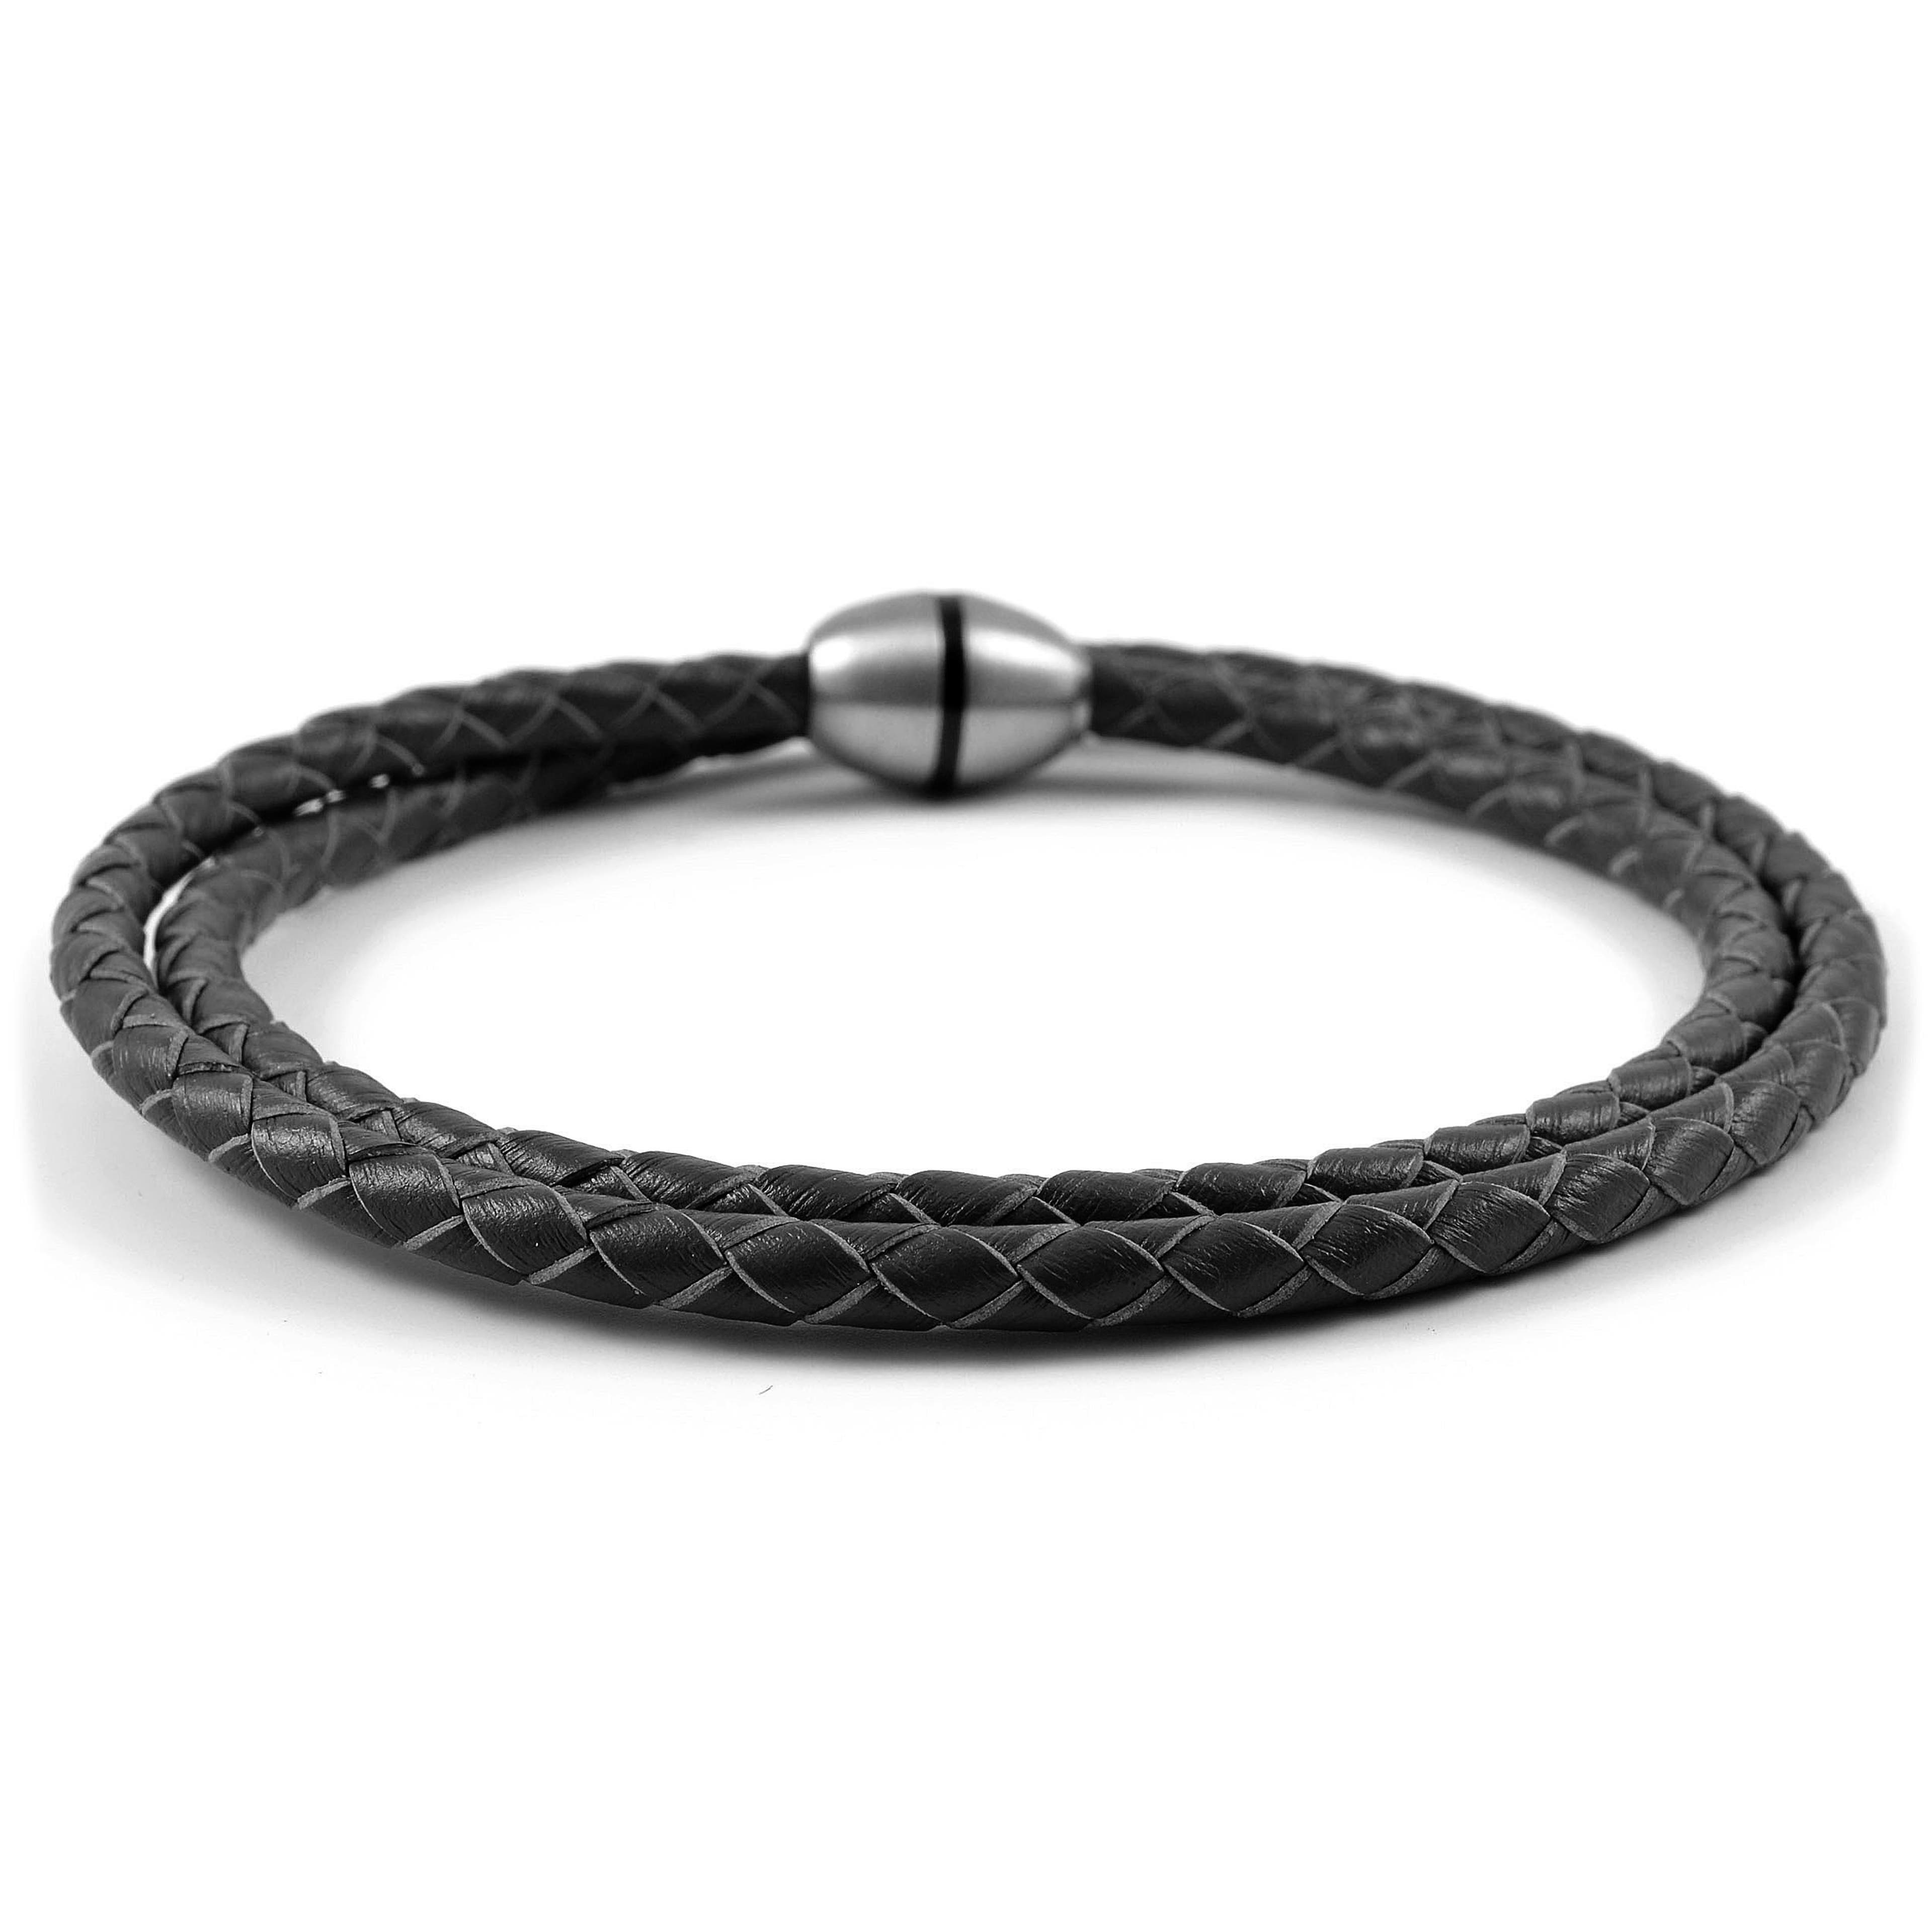 Black Bolo Twisted Leather Bracelet